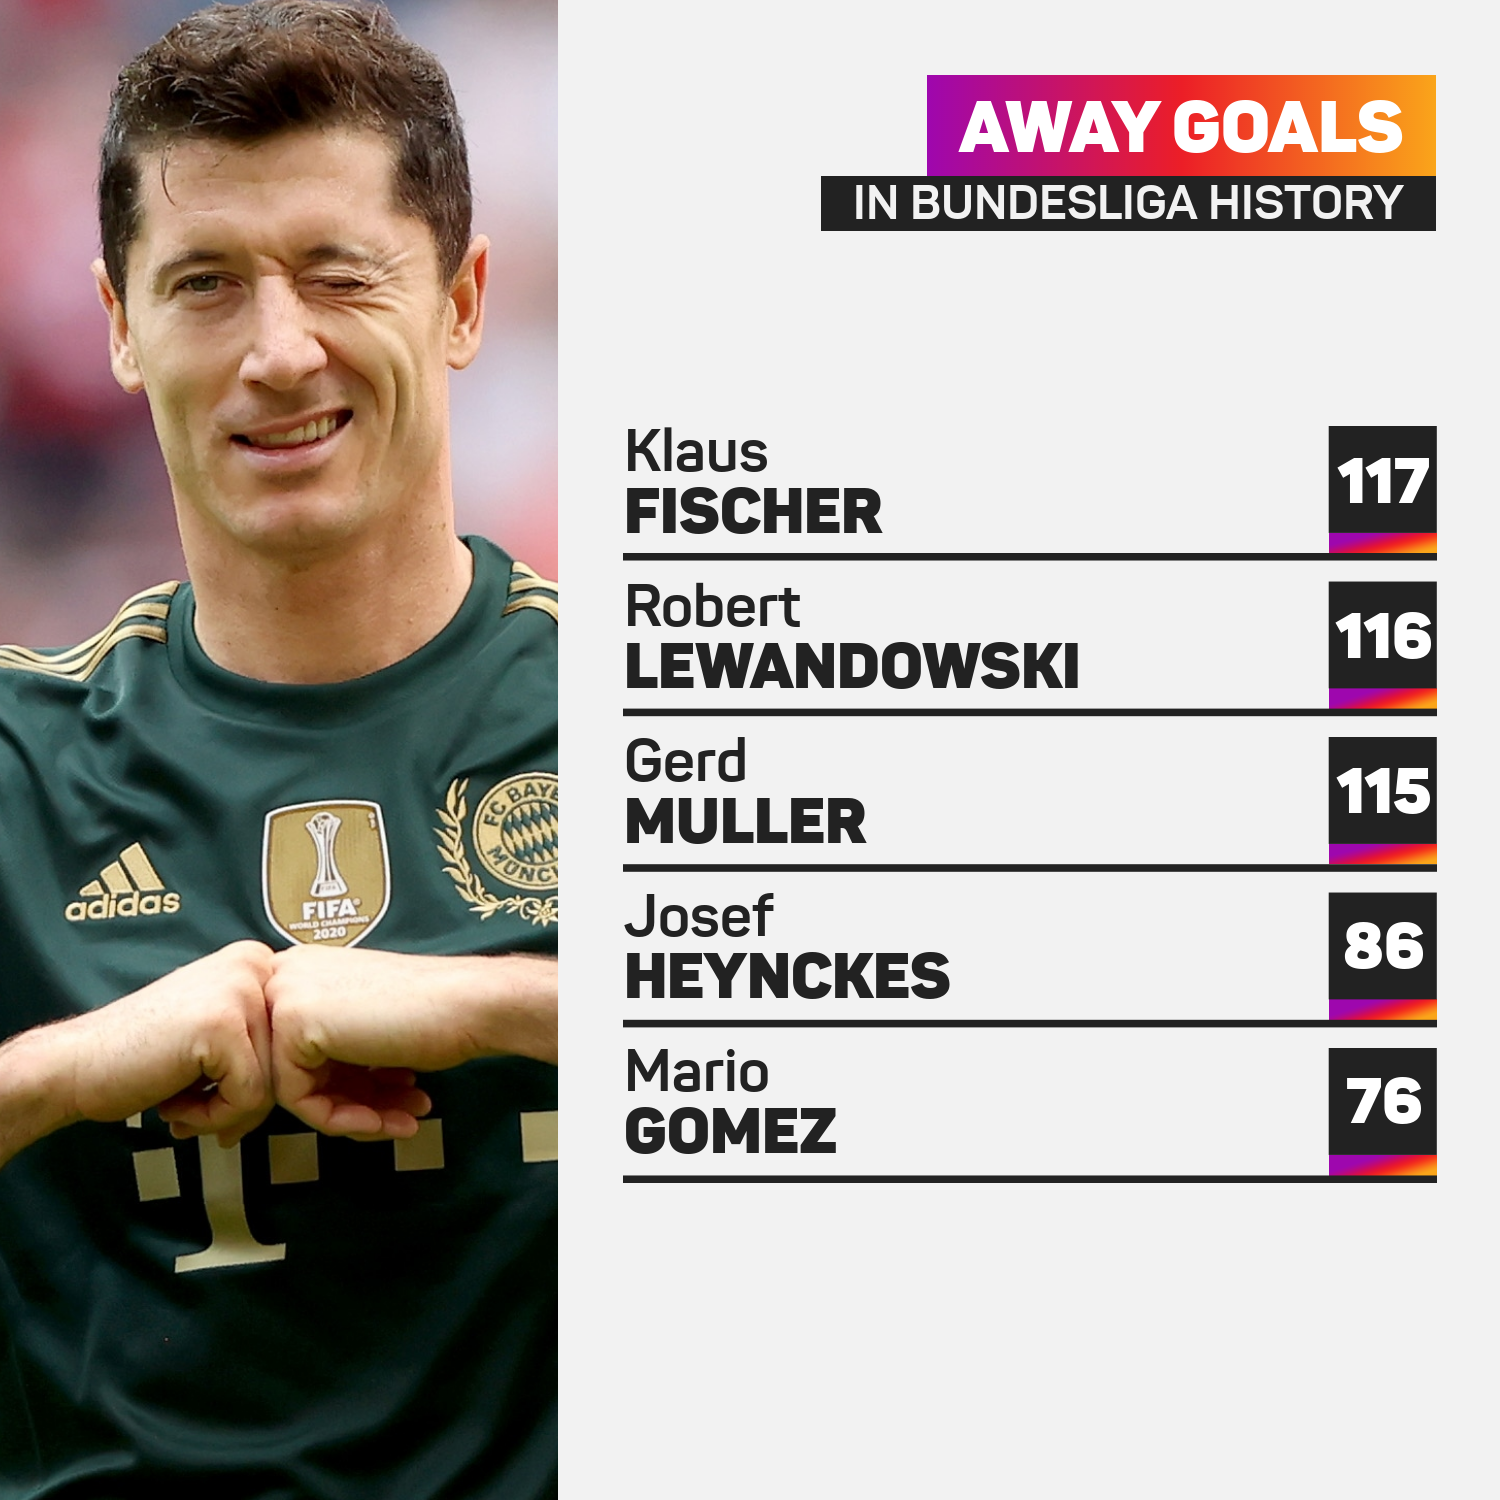 Top scorers away from home in Bundesliga history